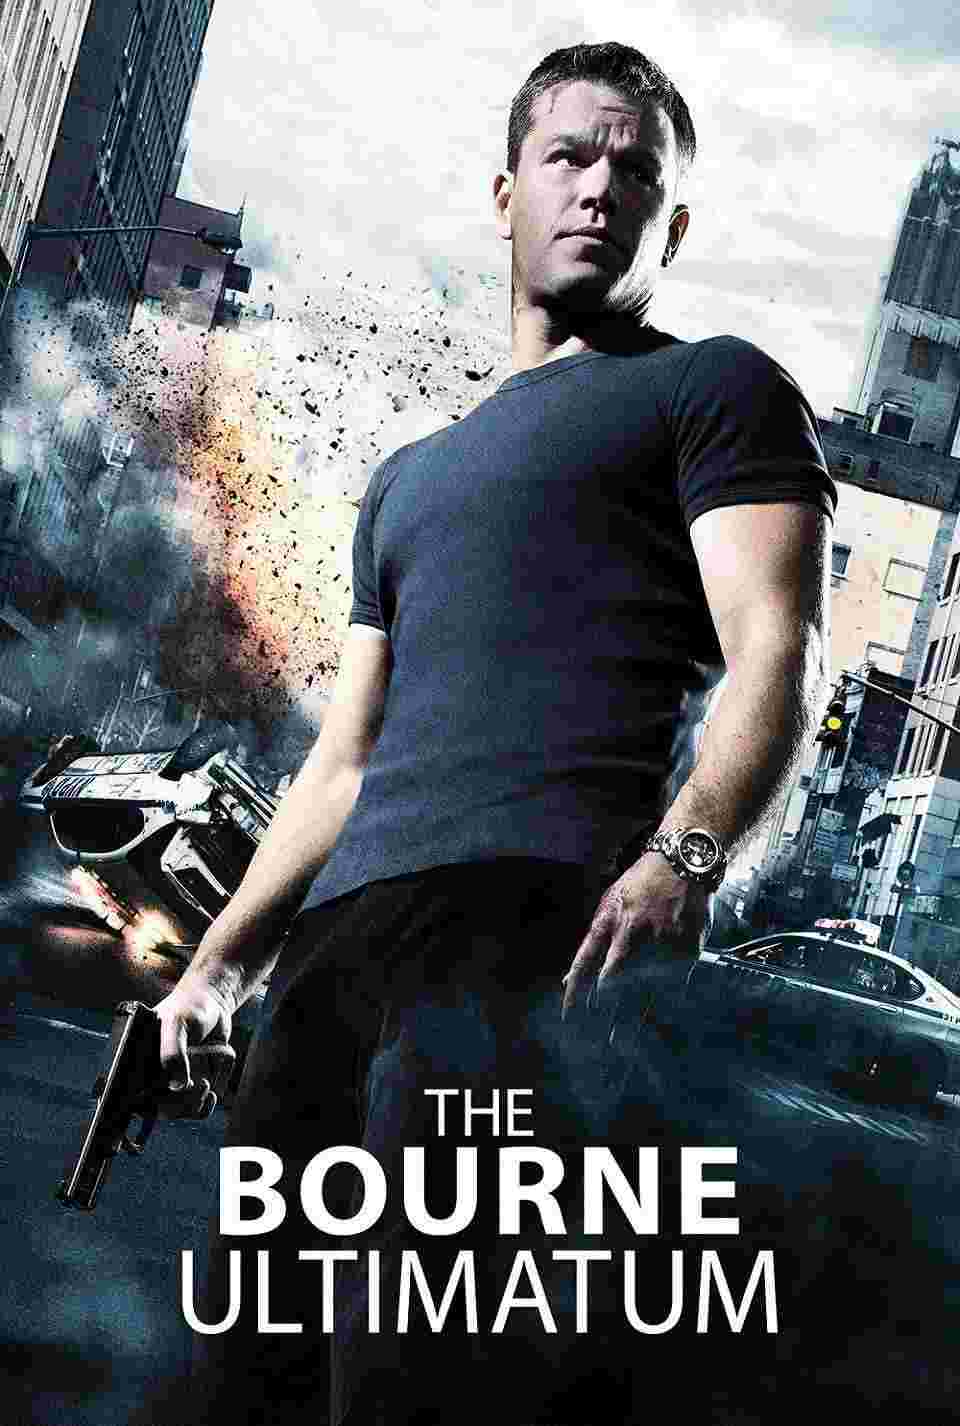 The Bourne Ultimatum (2007) Matt Damon